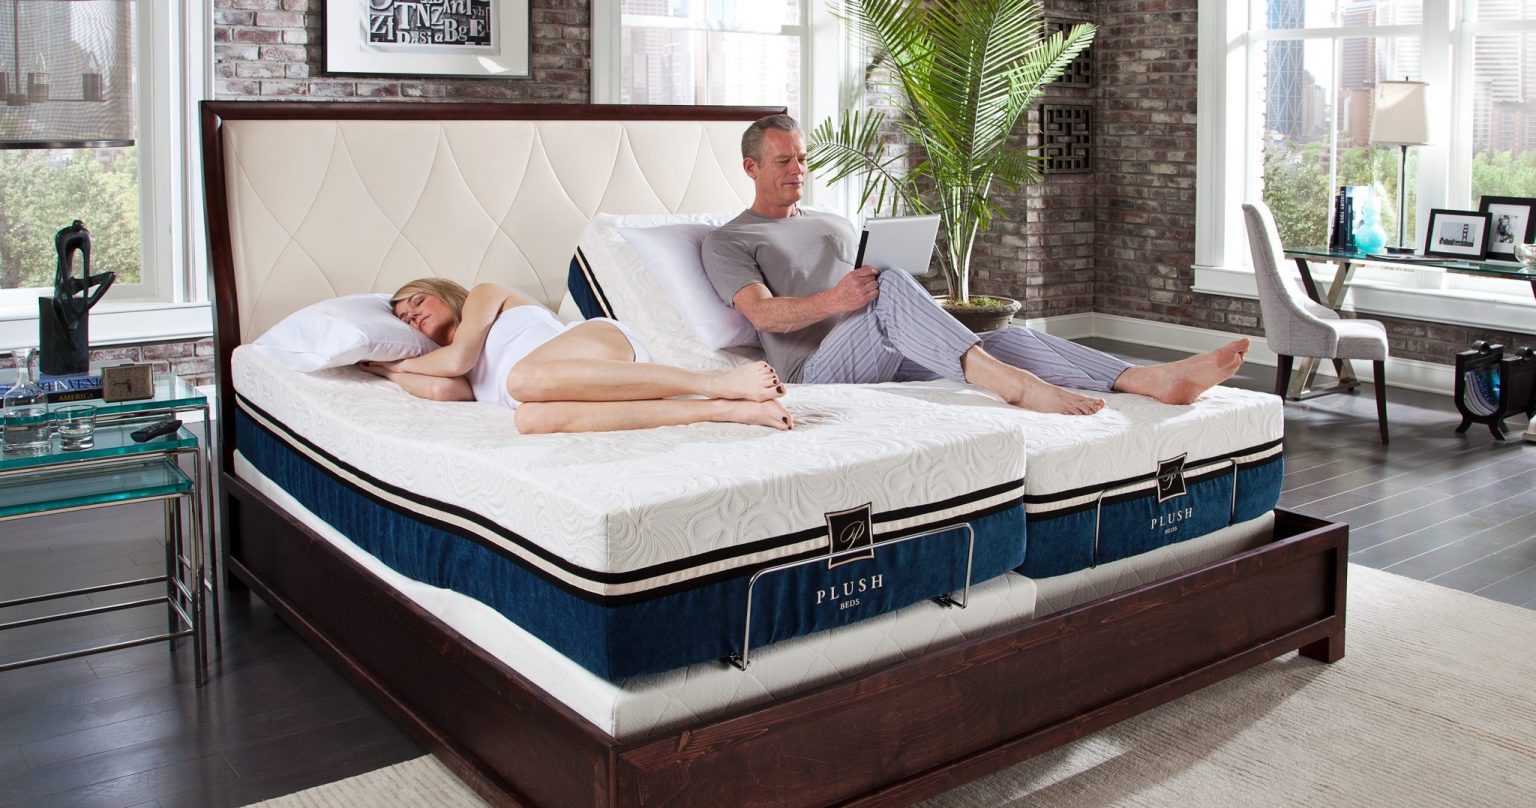 wirecutter certi-pur mattress review